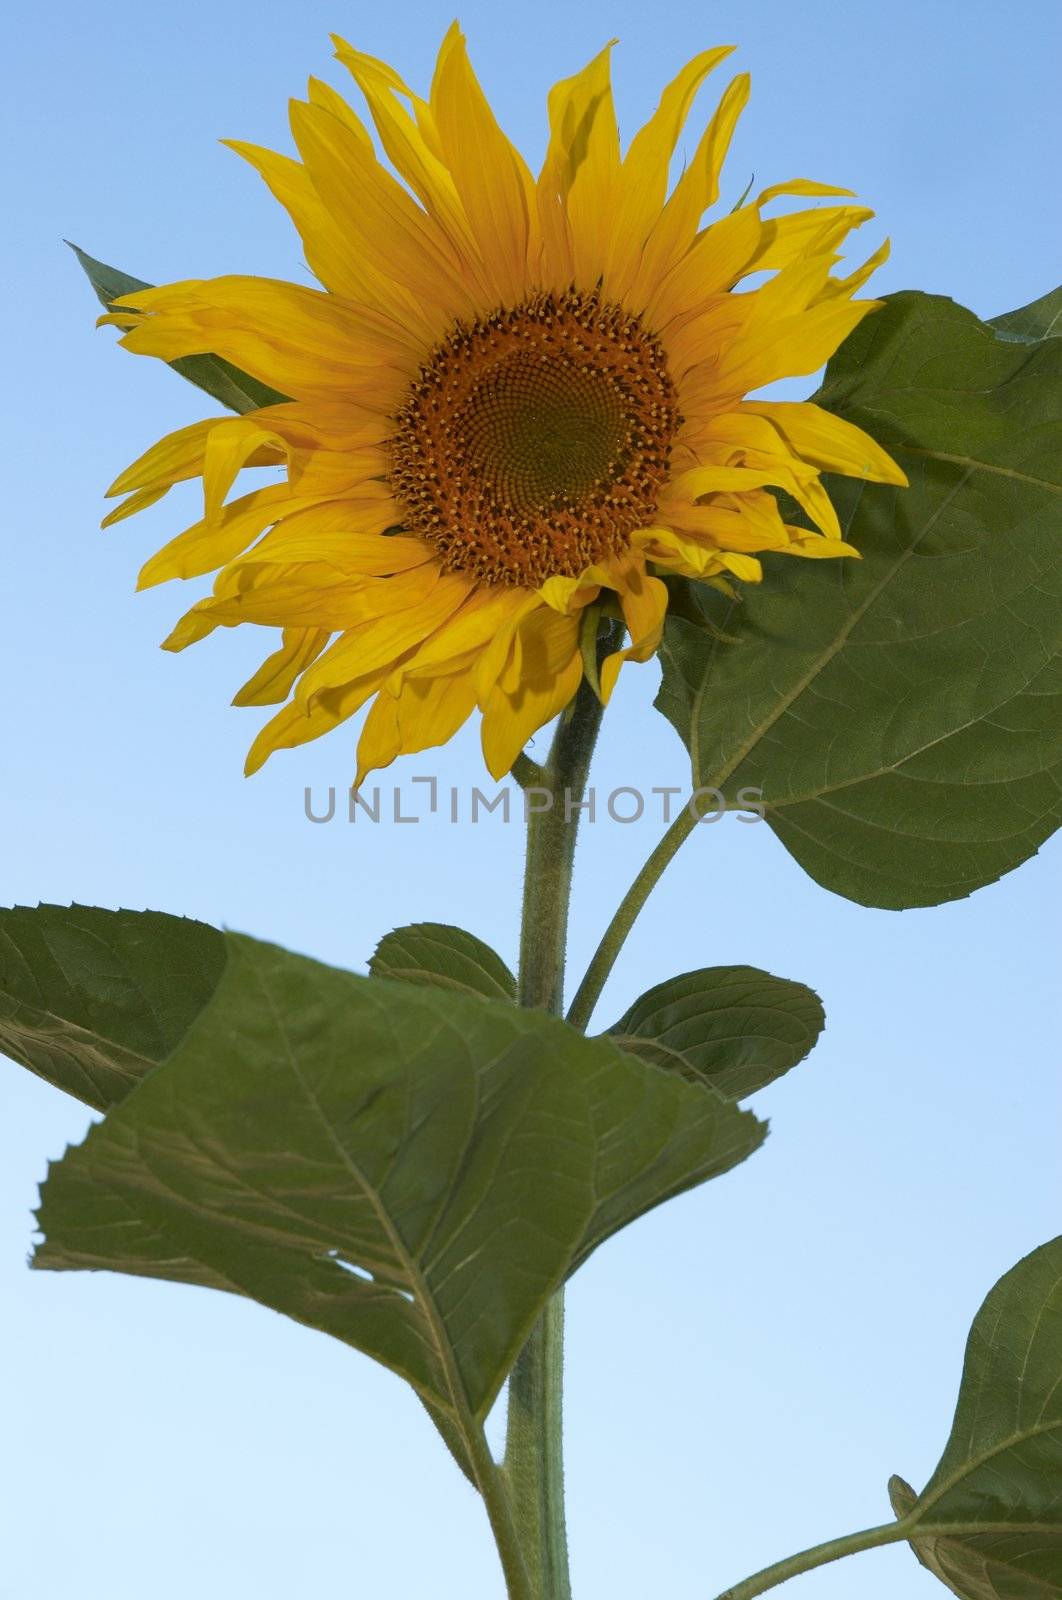 the sunflower